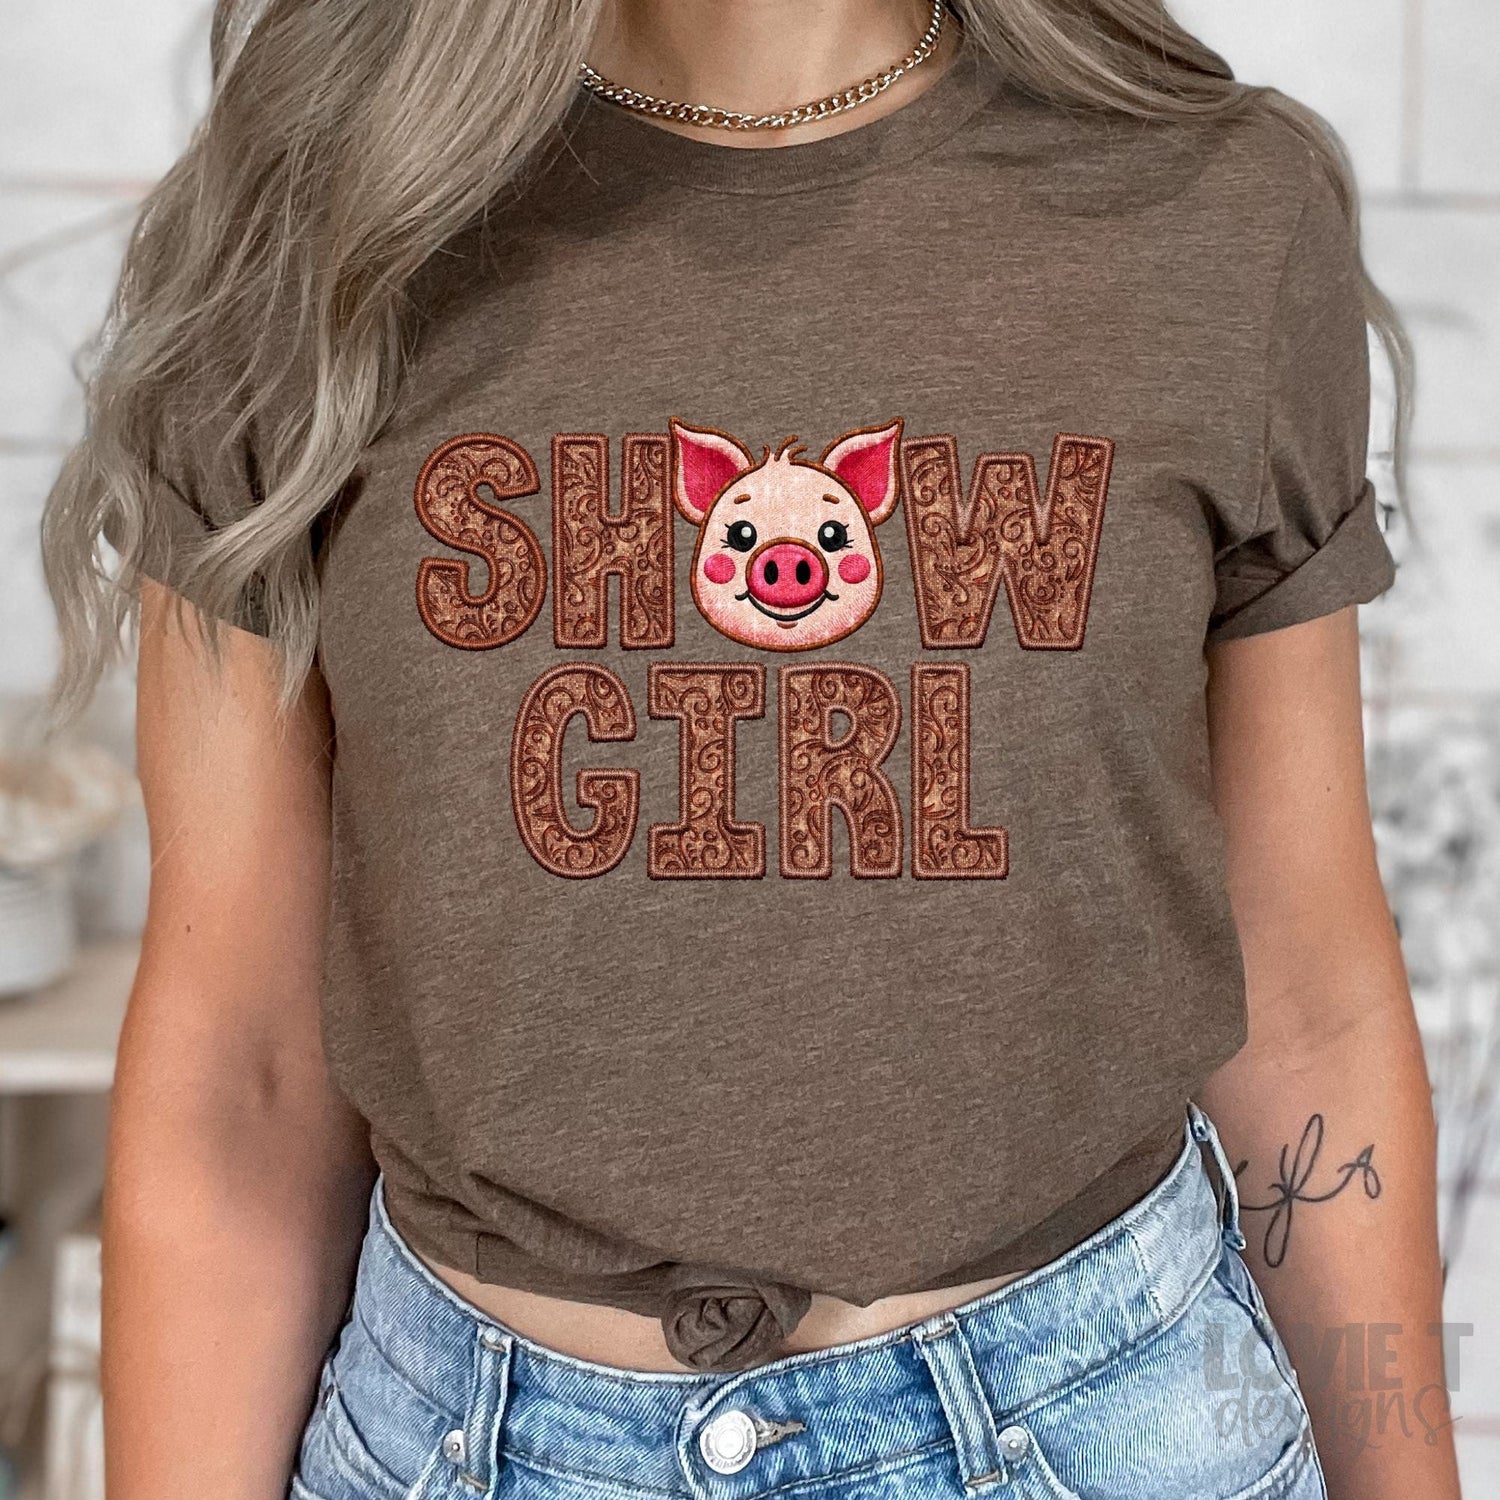 Show Girl